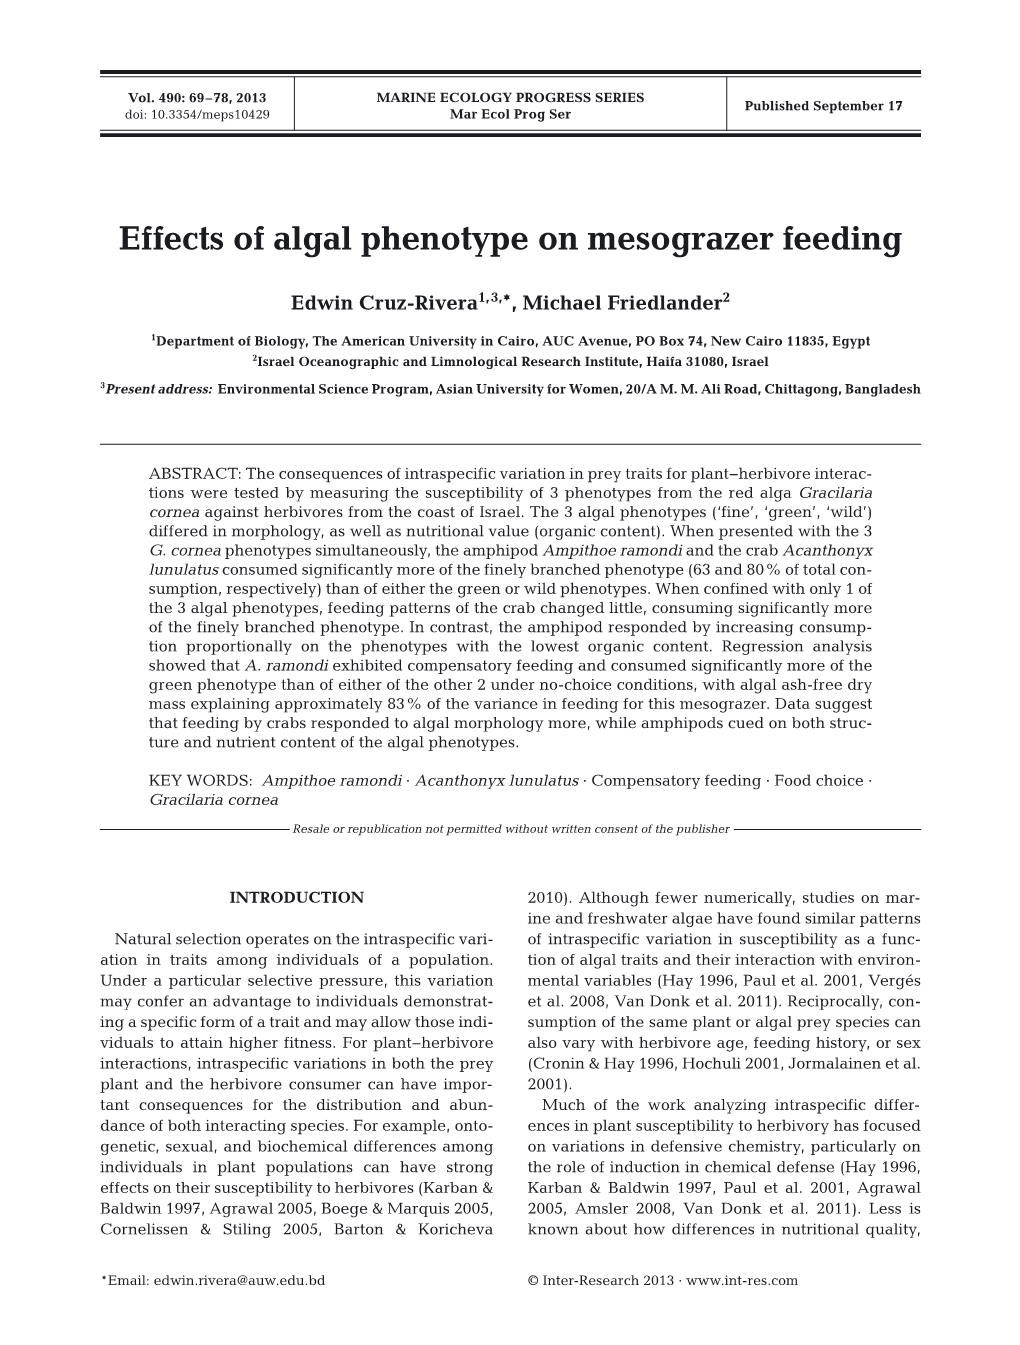 Effects of Algal Phenotype on Mesograzer Feeding